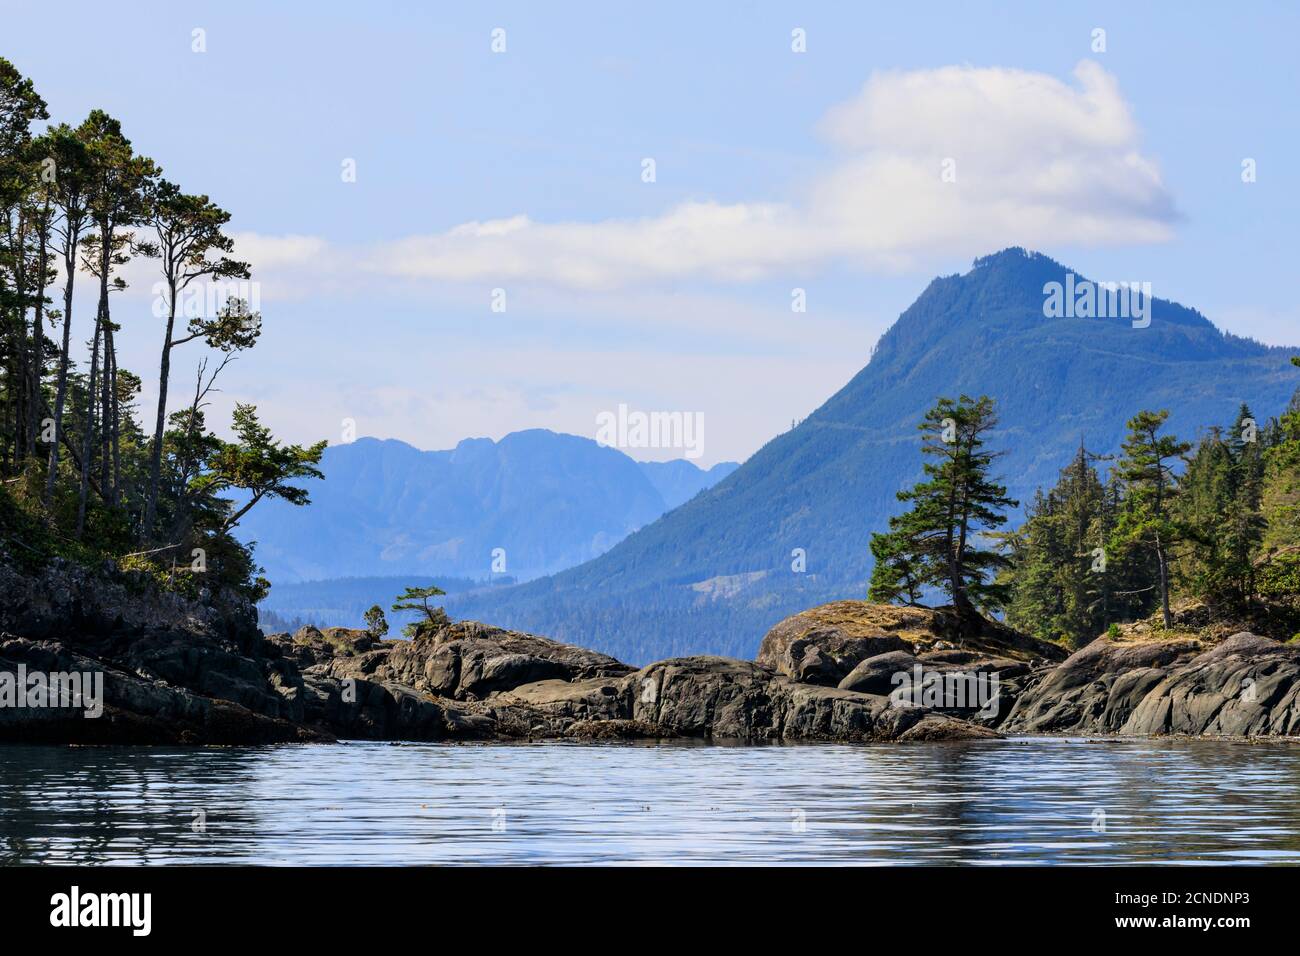 Tree lined rocky shore of an island in calm seas near Alert Bay, Inside Passage, British Columbia, Canada Stock Photo